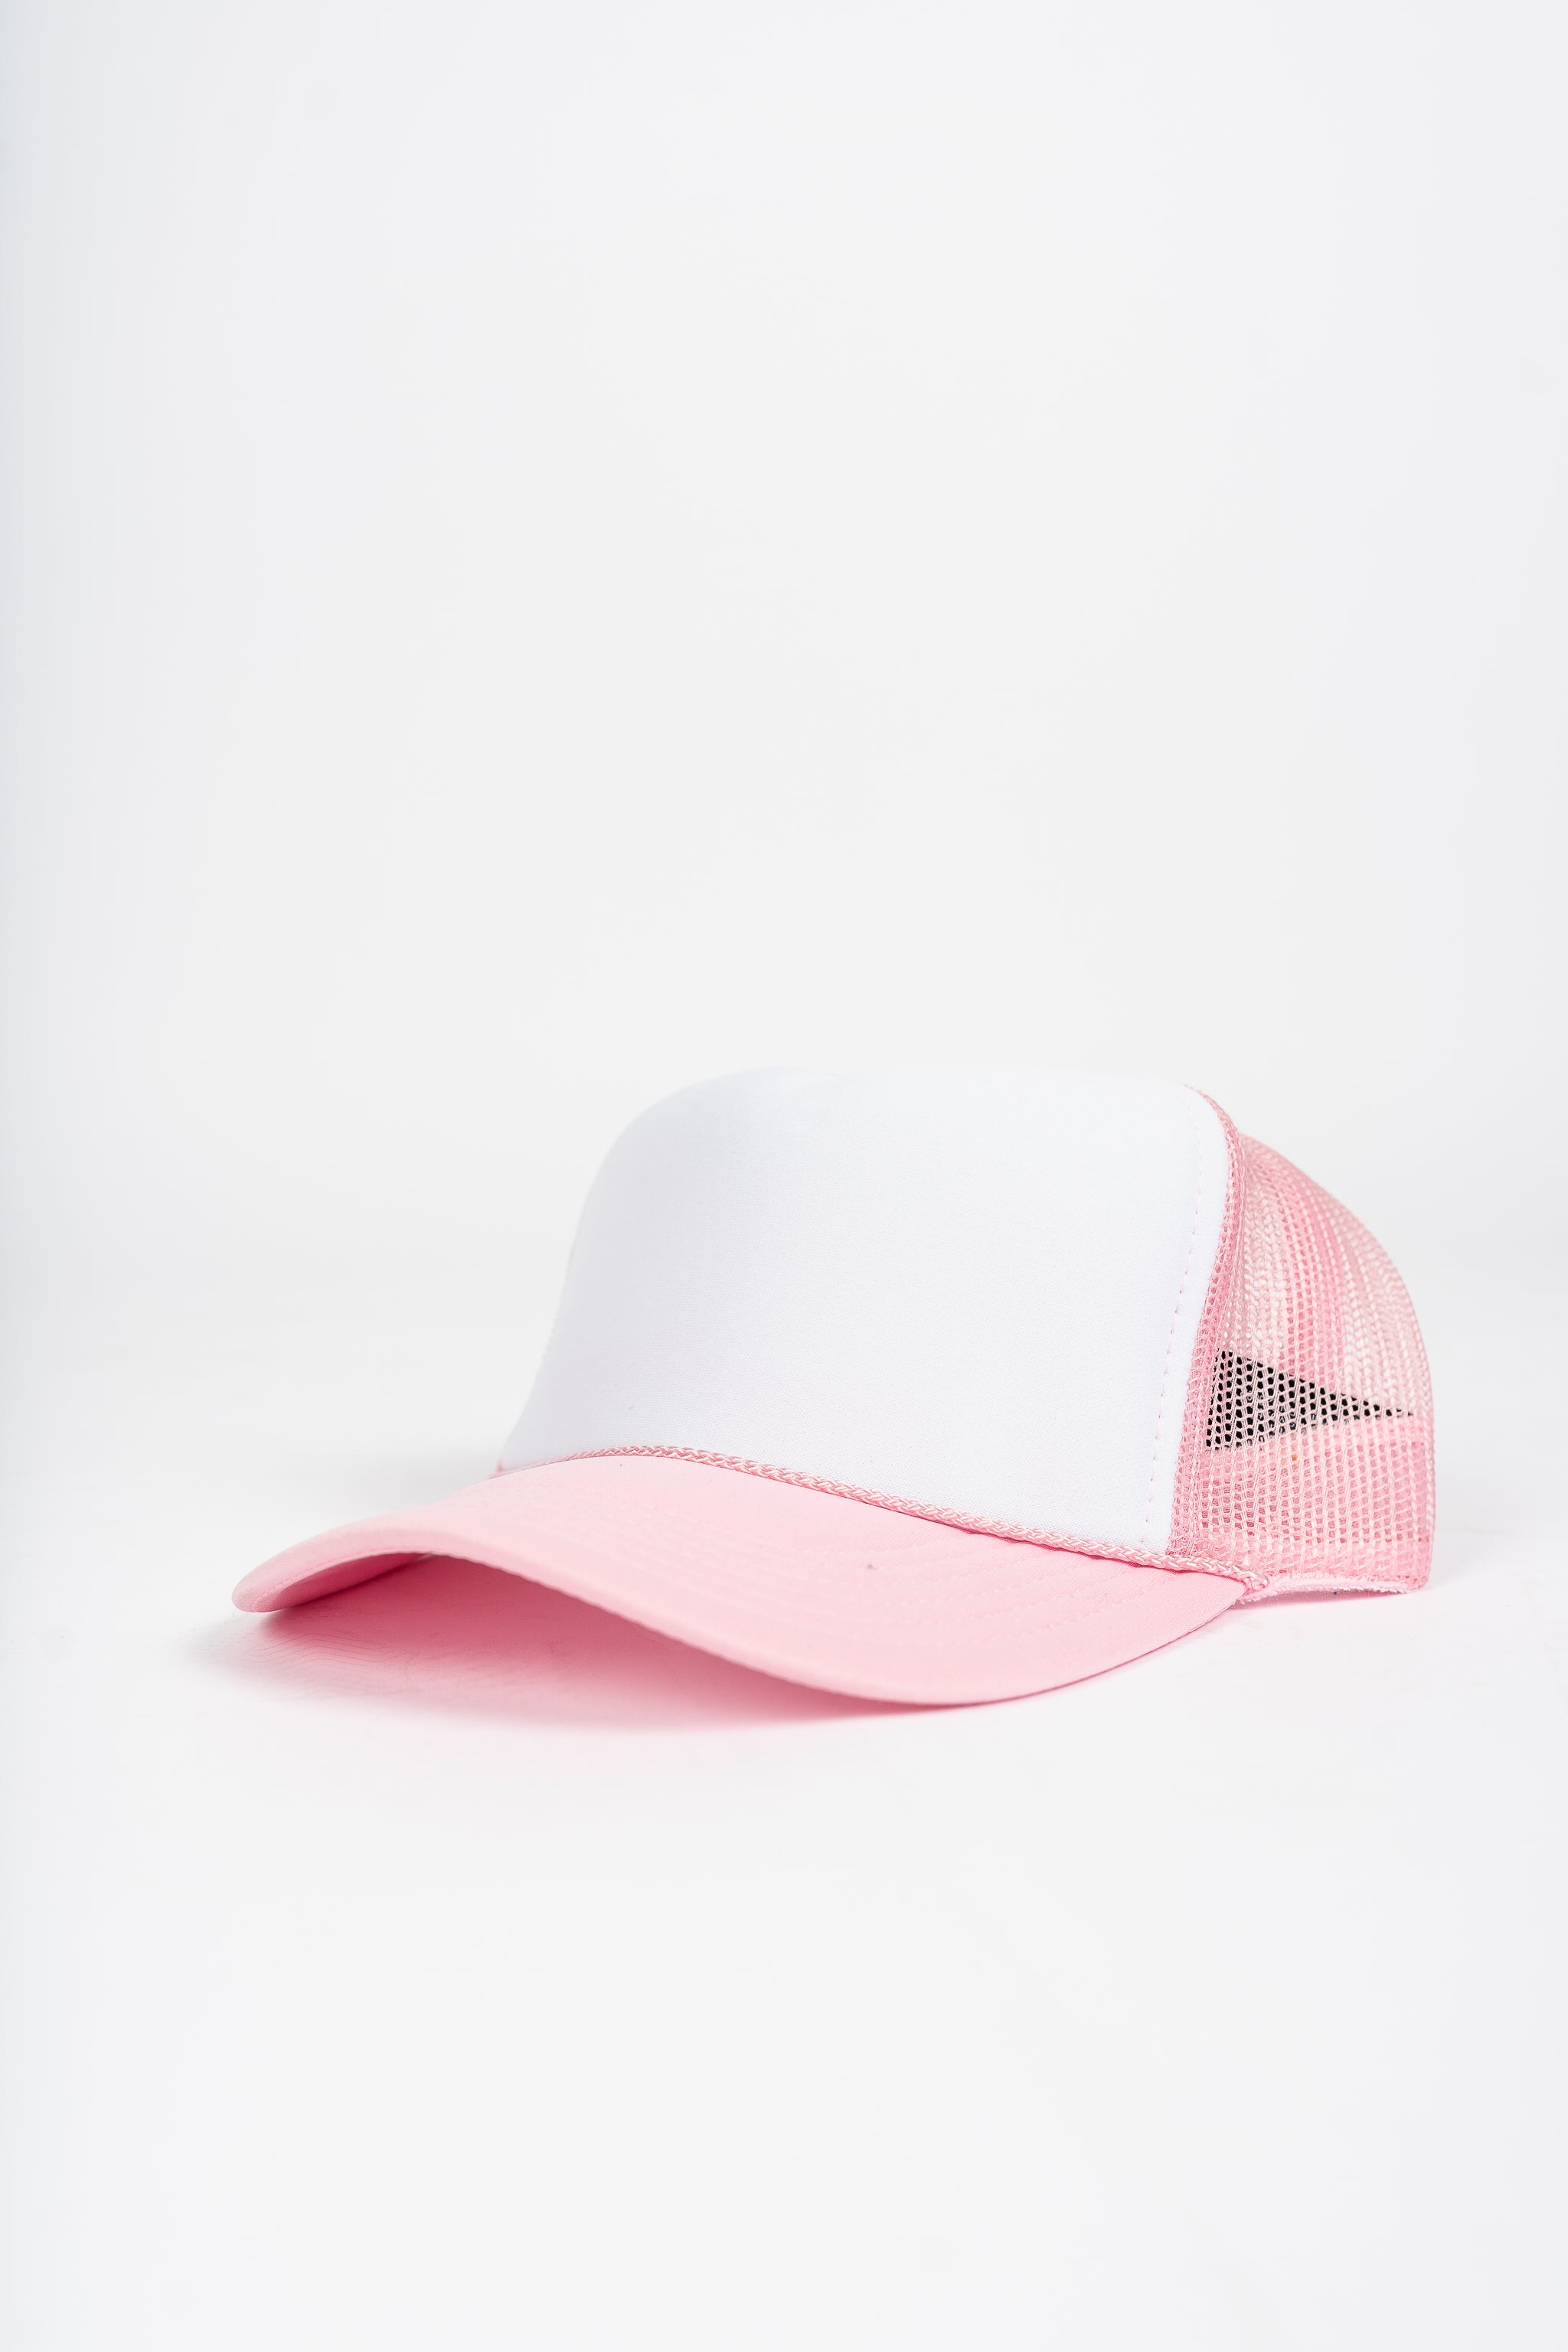 soft pink/white